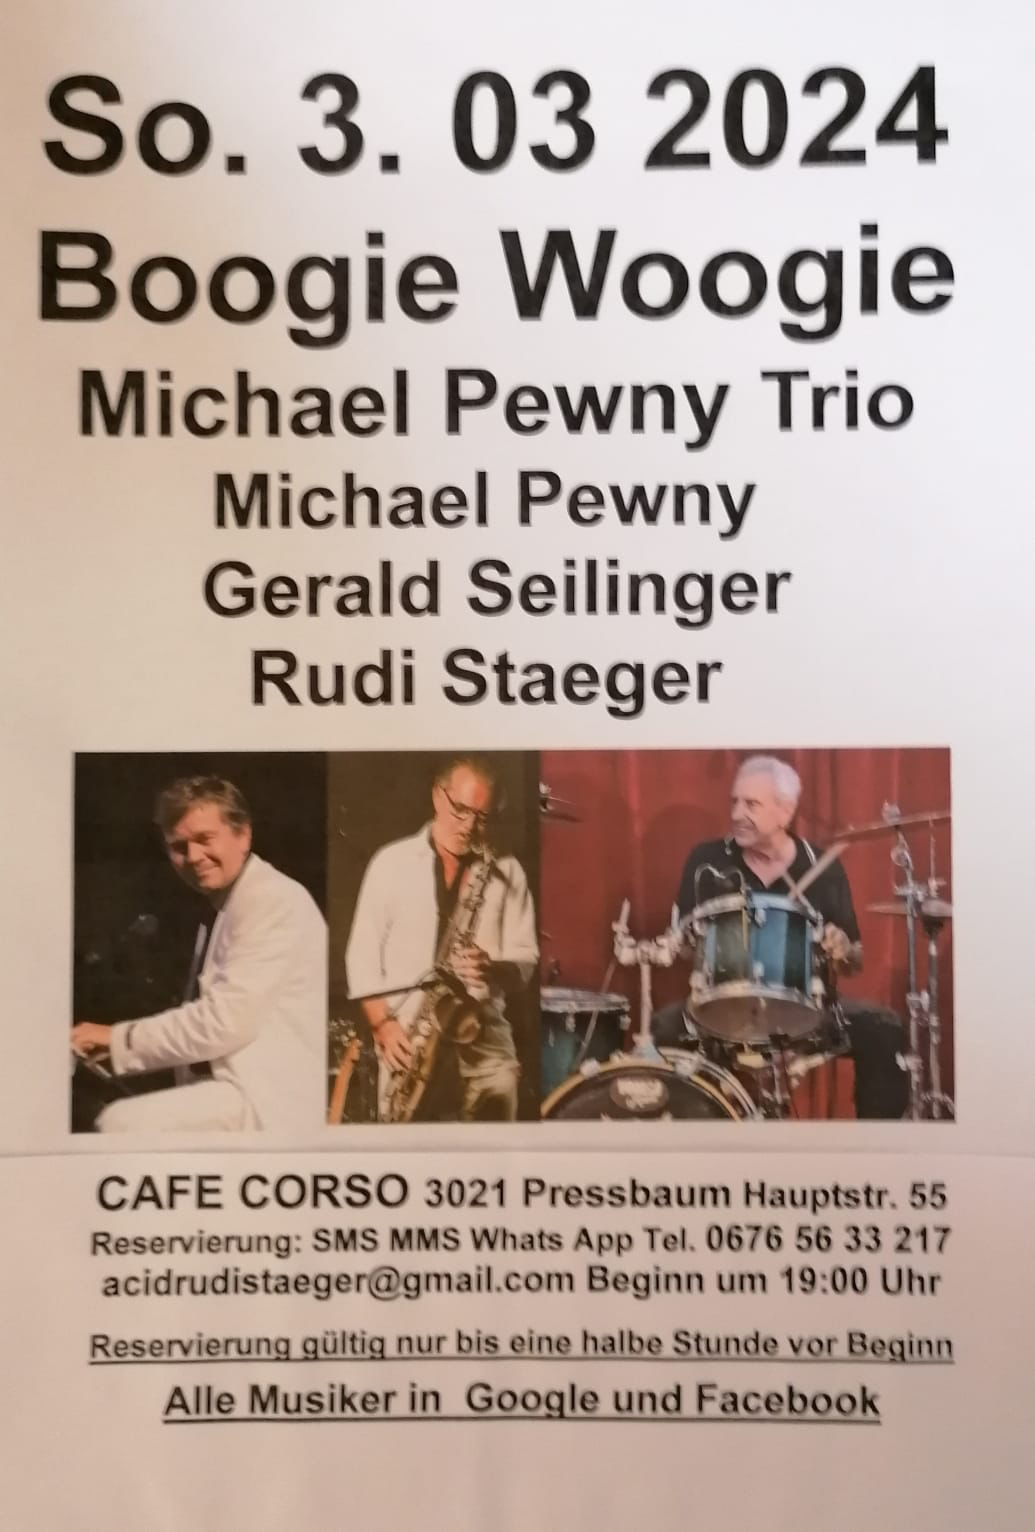 Boogie Woogie - Michael Pewny Trio @ Cafe Corso